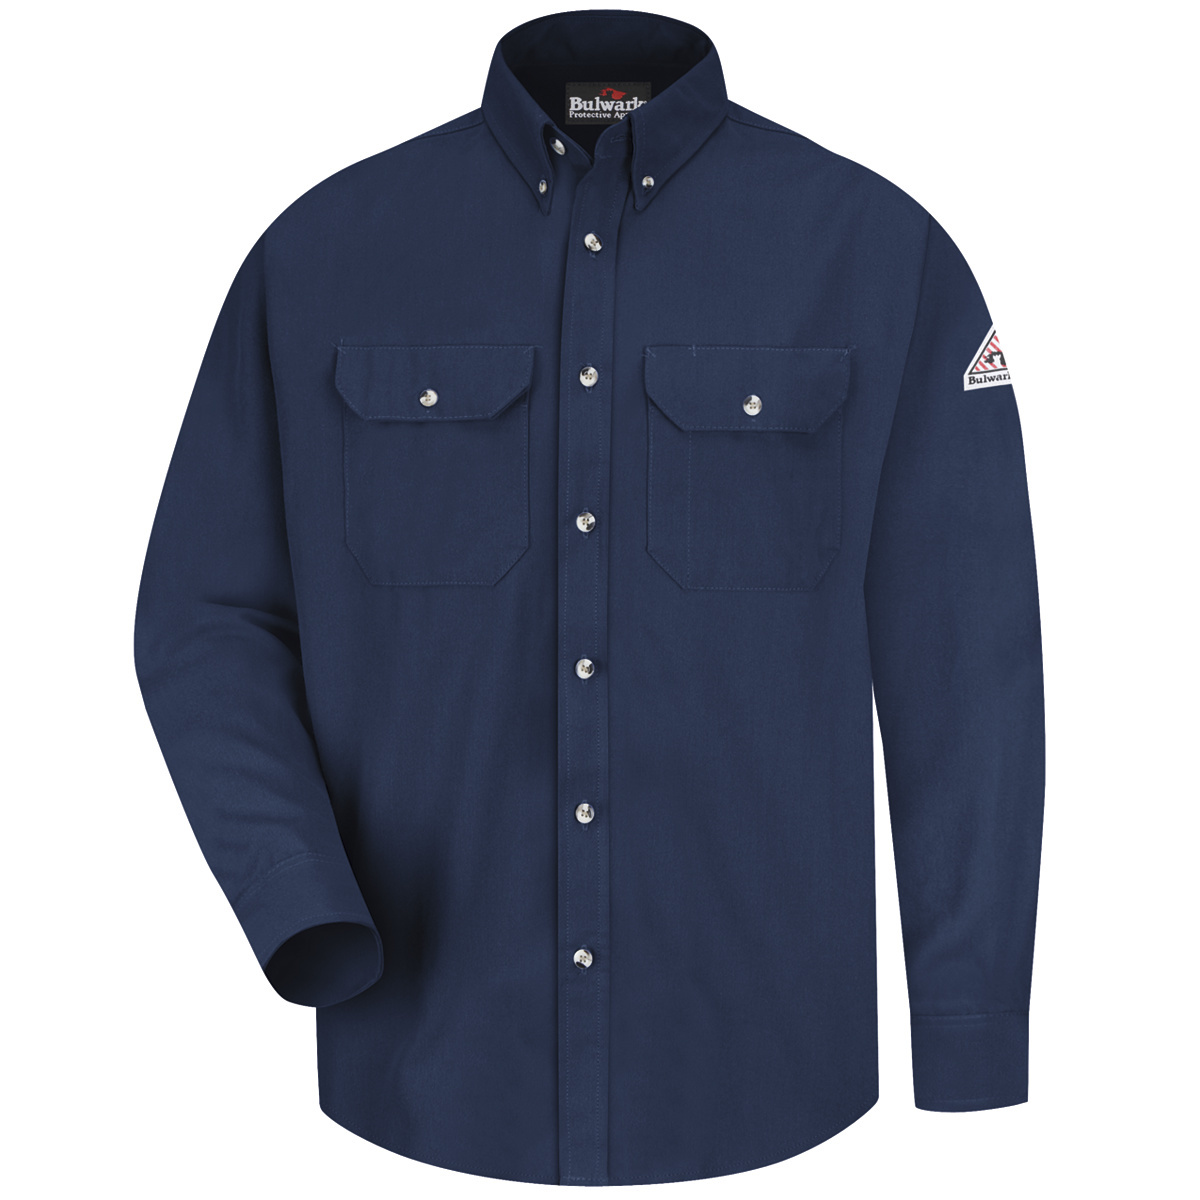 Bulwark® 2X Tall Navy Blue Modacrylic/Lyocell/Aramid Flame Resistant Dress Uniform Shirt With Button Front Closure